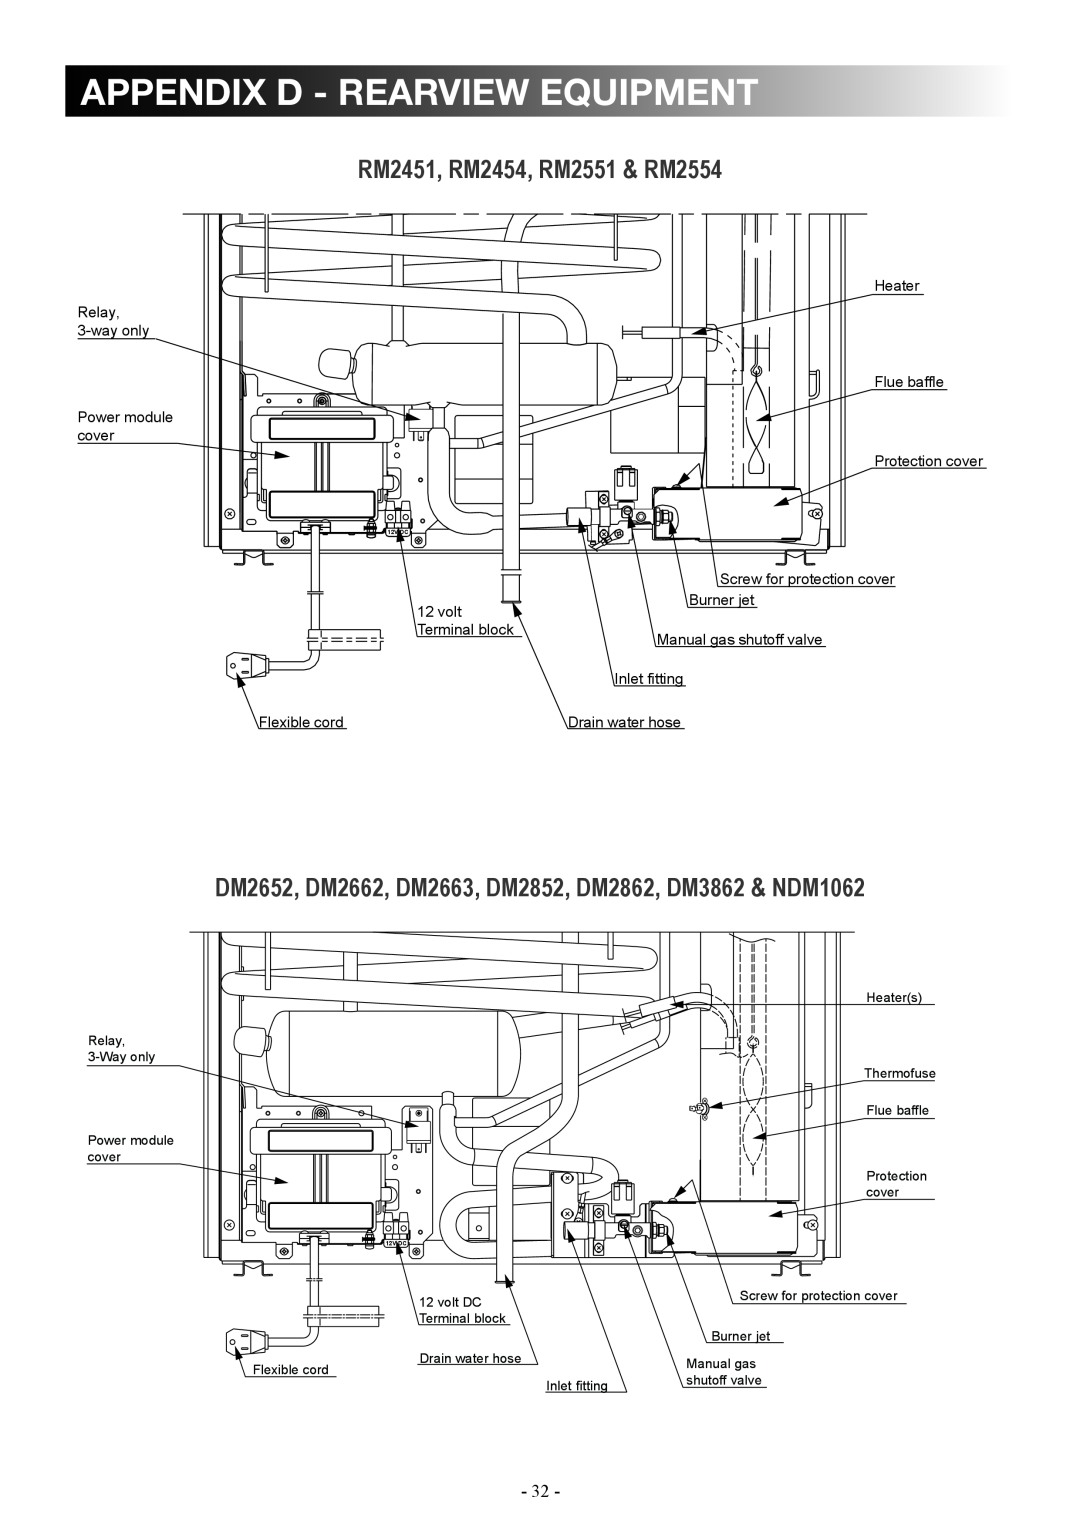 Dometic DM2862 appendix D - rearview equipment, RM2451, RM2454, RM2551 & RM2554, Relay 3-way only Power module cover, volt 